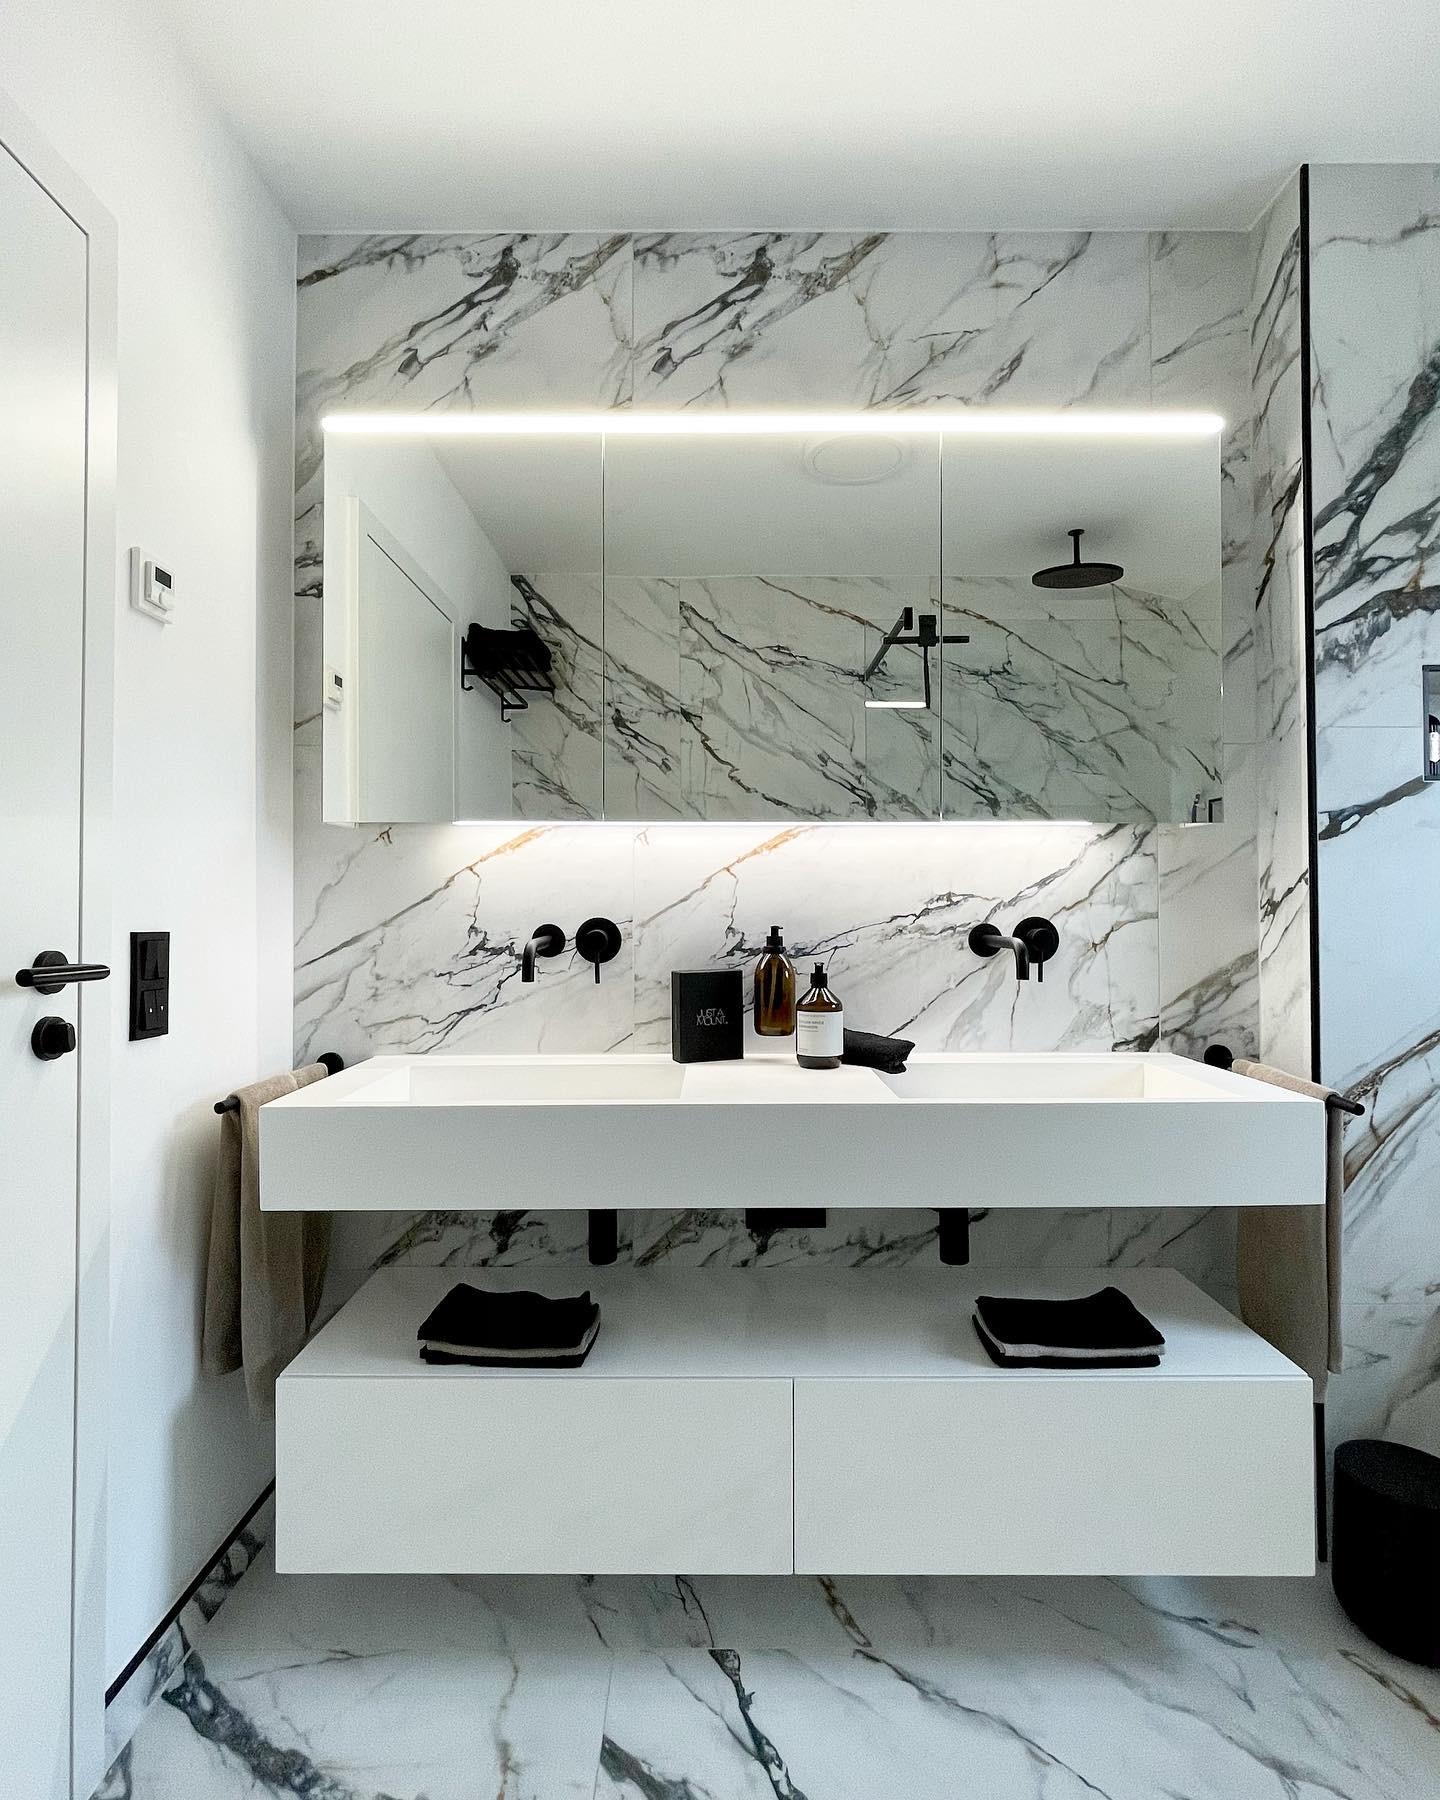 Bathroom inspo🖤🤍 #schwarzweissliebe #bathroominspo #badezimmer #masterbad #marmorliebe #interiorinspo #home #inspohome